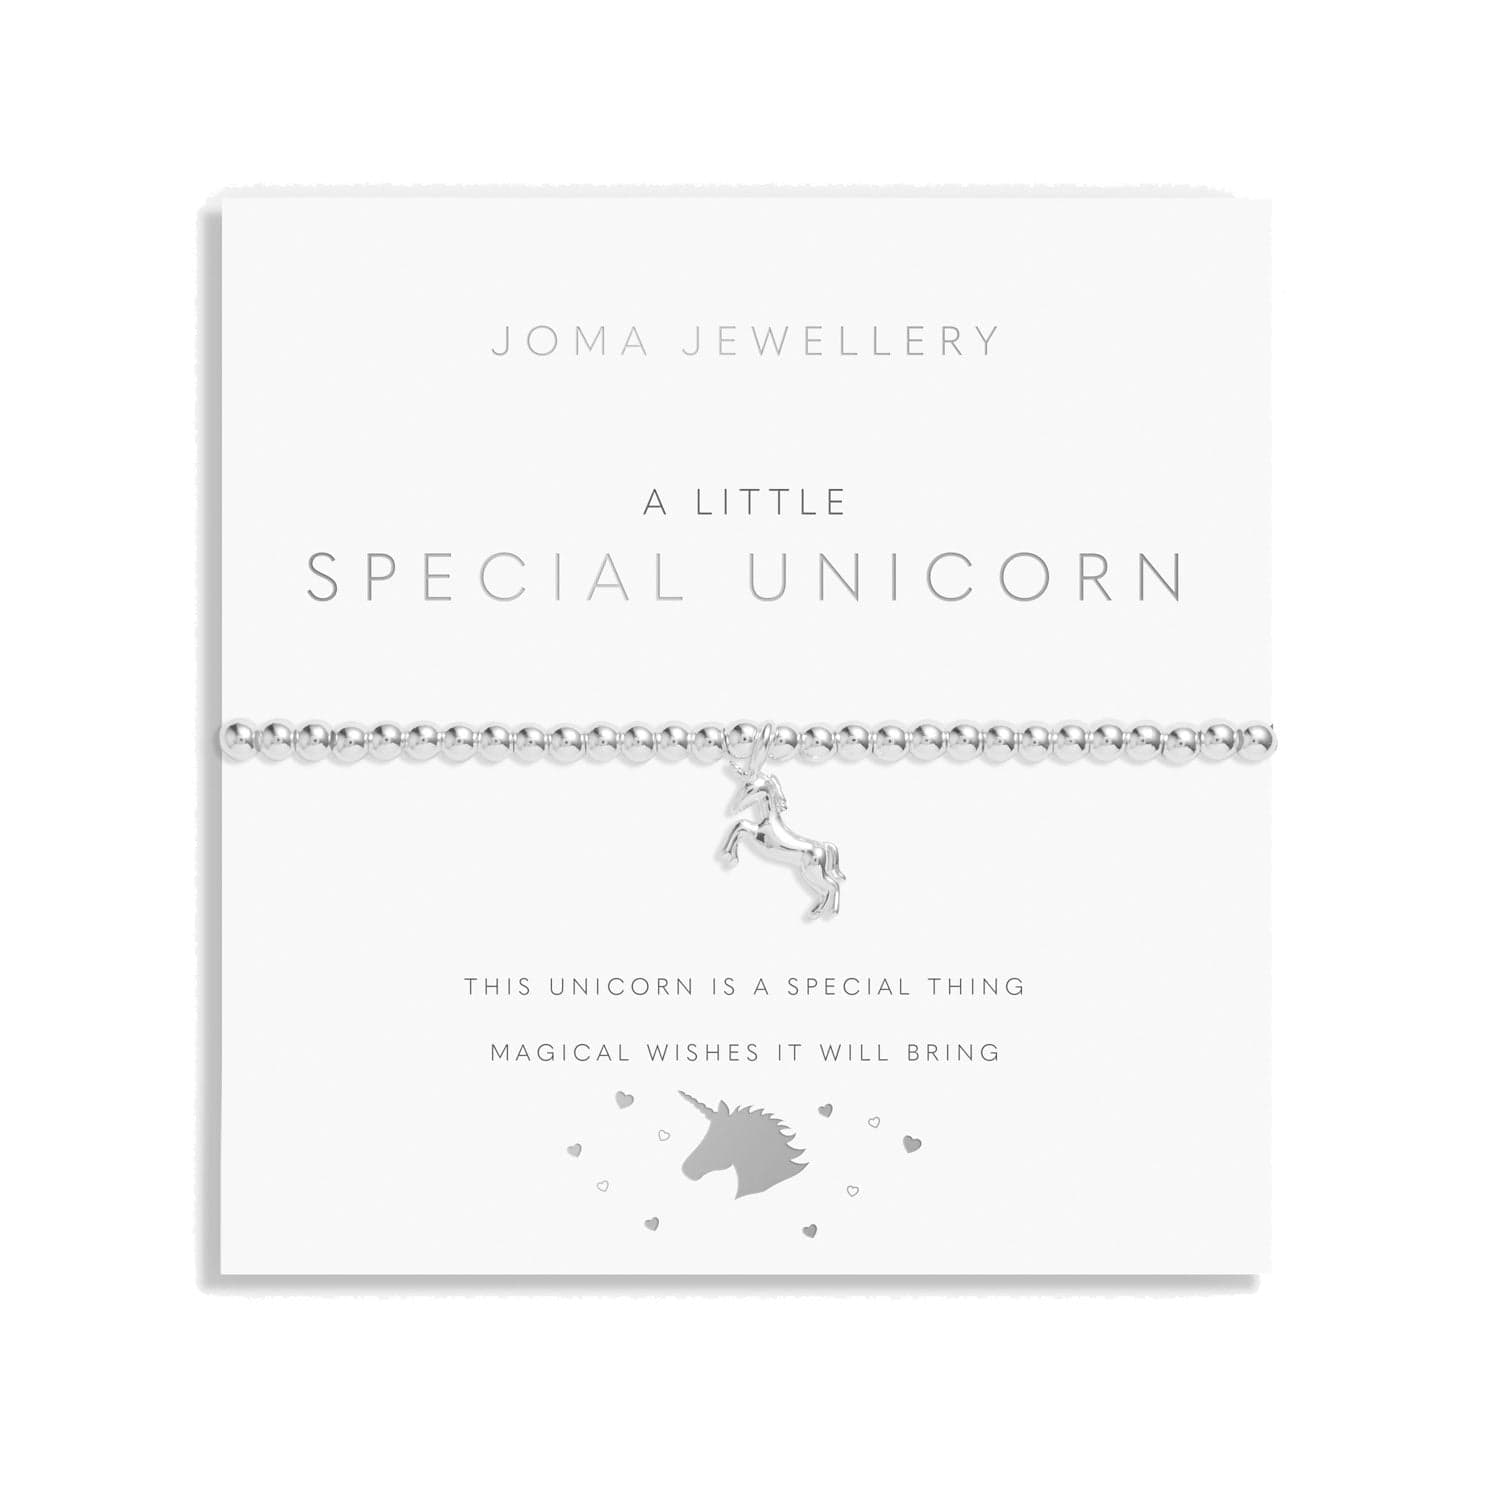 Joma Jewellery Childrens Bracelet Joma Jewellery Children's Bracelet - A Little Special Unicorn